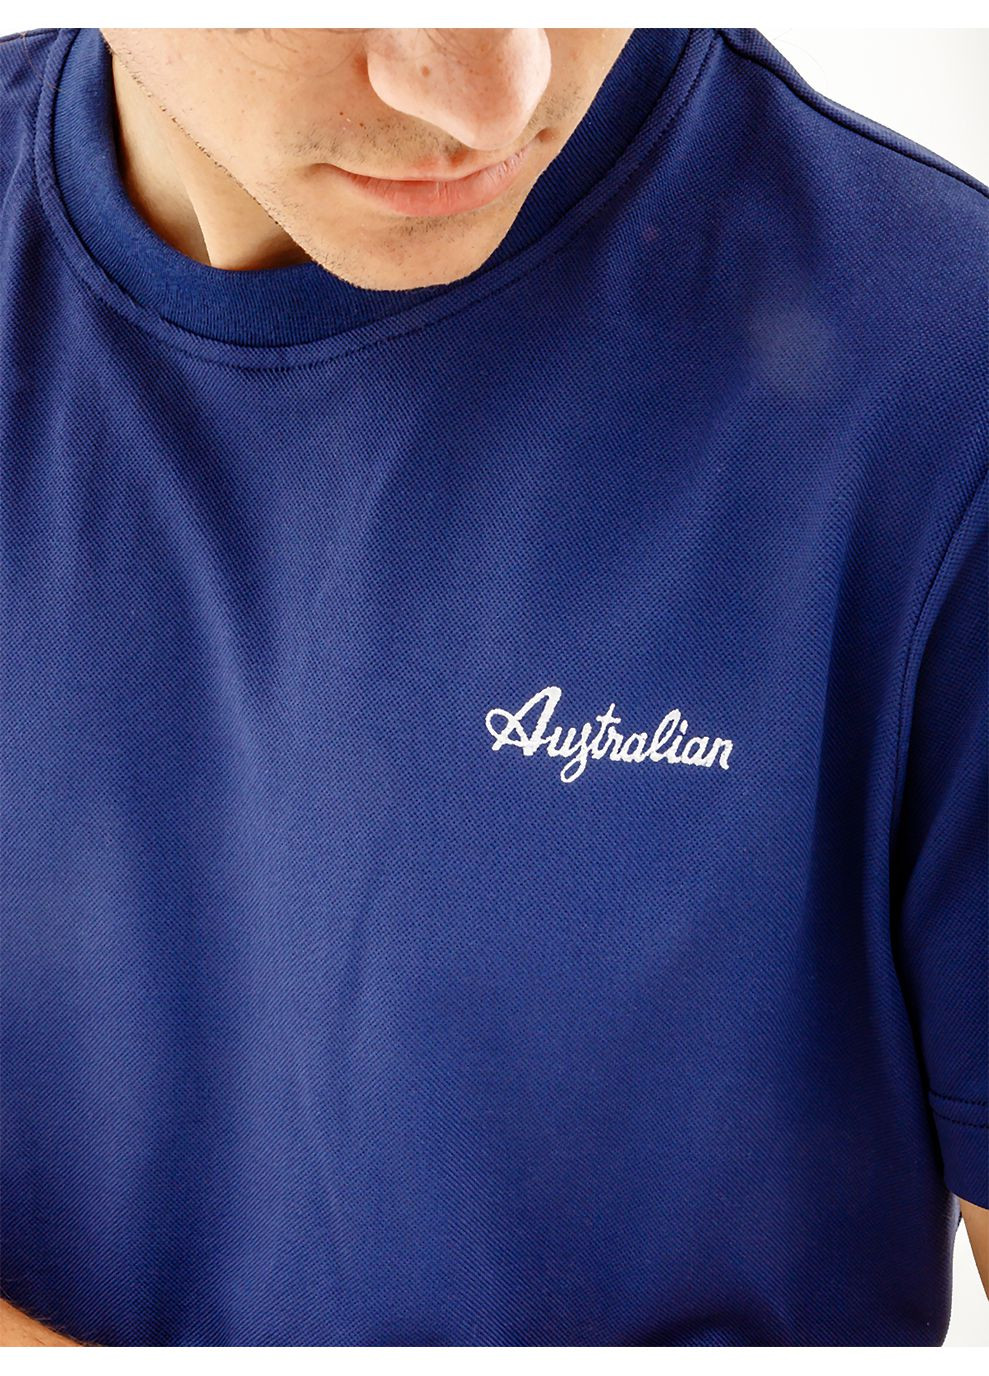 Синя чоловіча футболка easy tech pique' t-shirt r-fit синій Australian